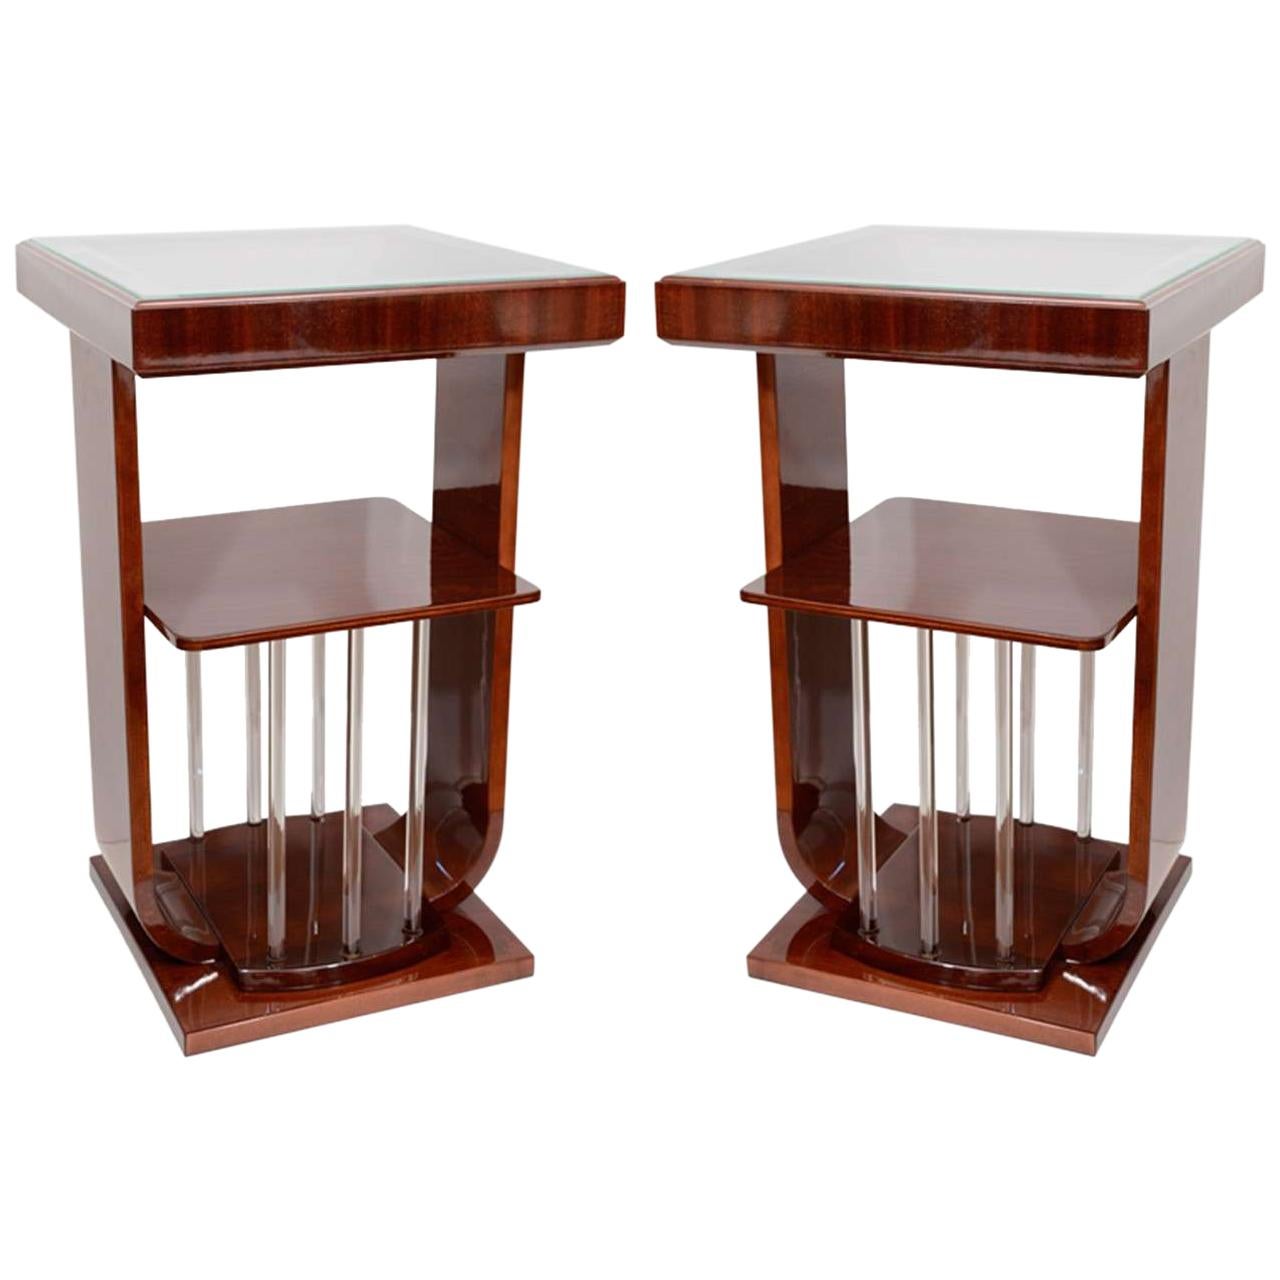 Single Art Deco Square Lamp Table